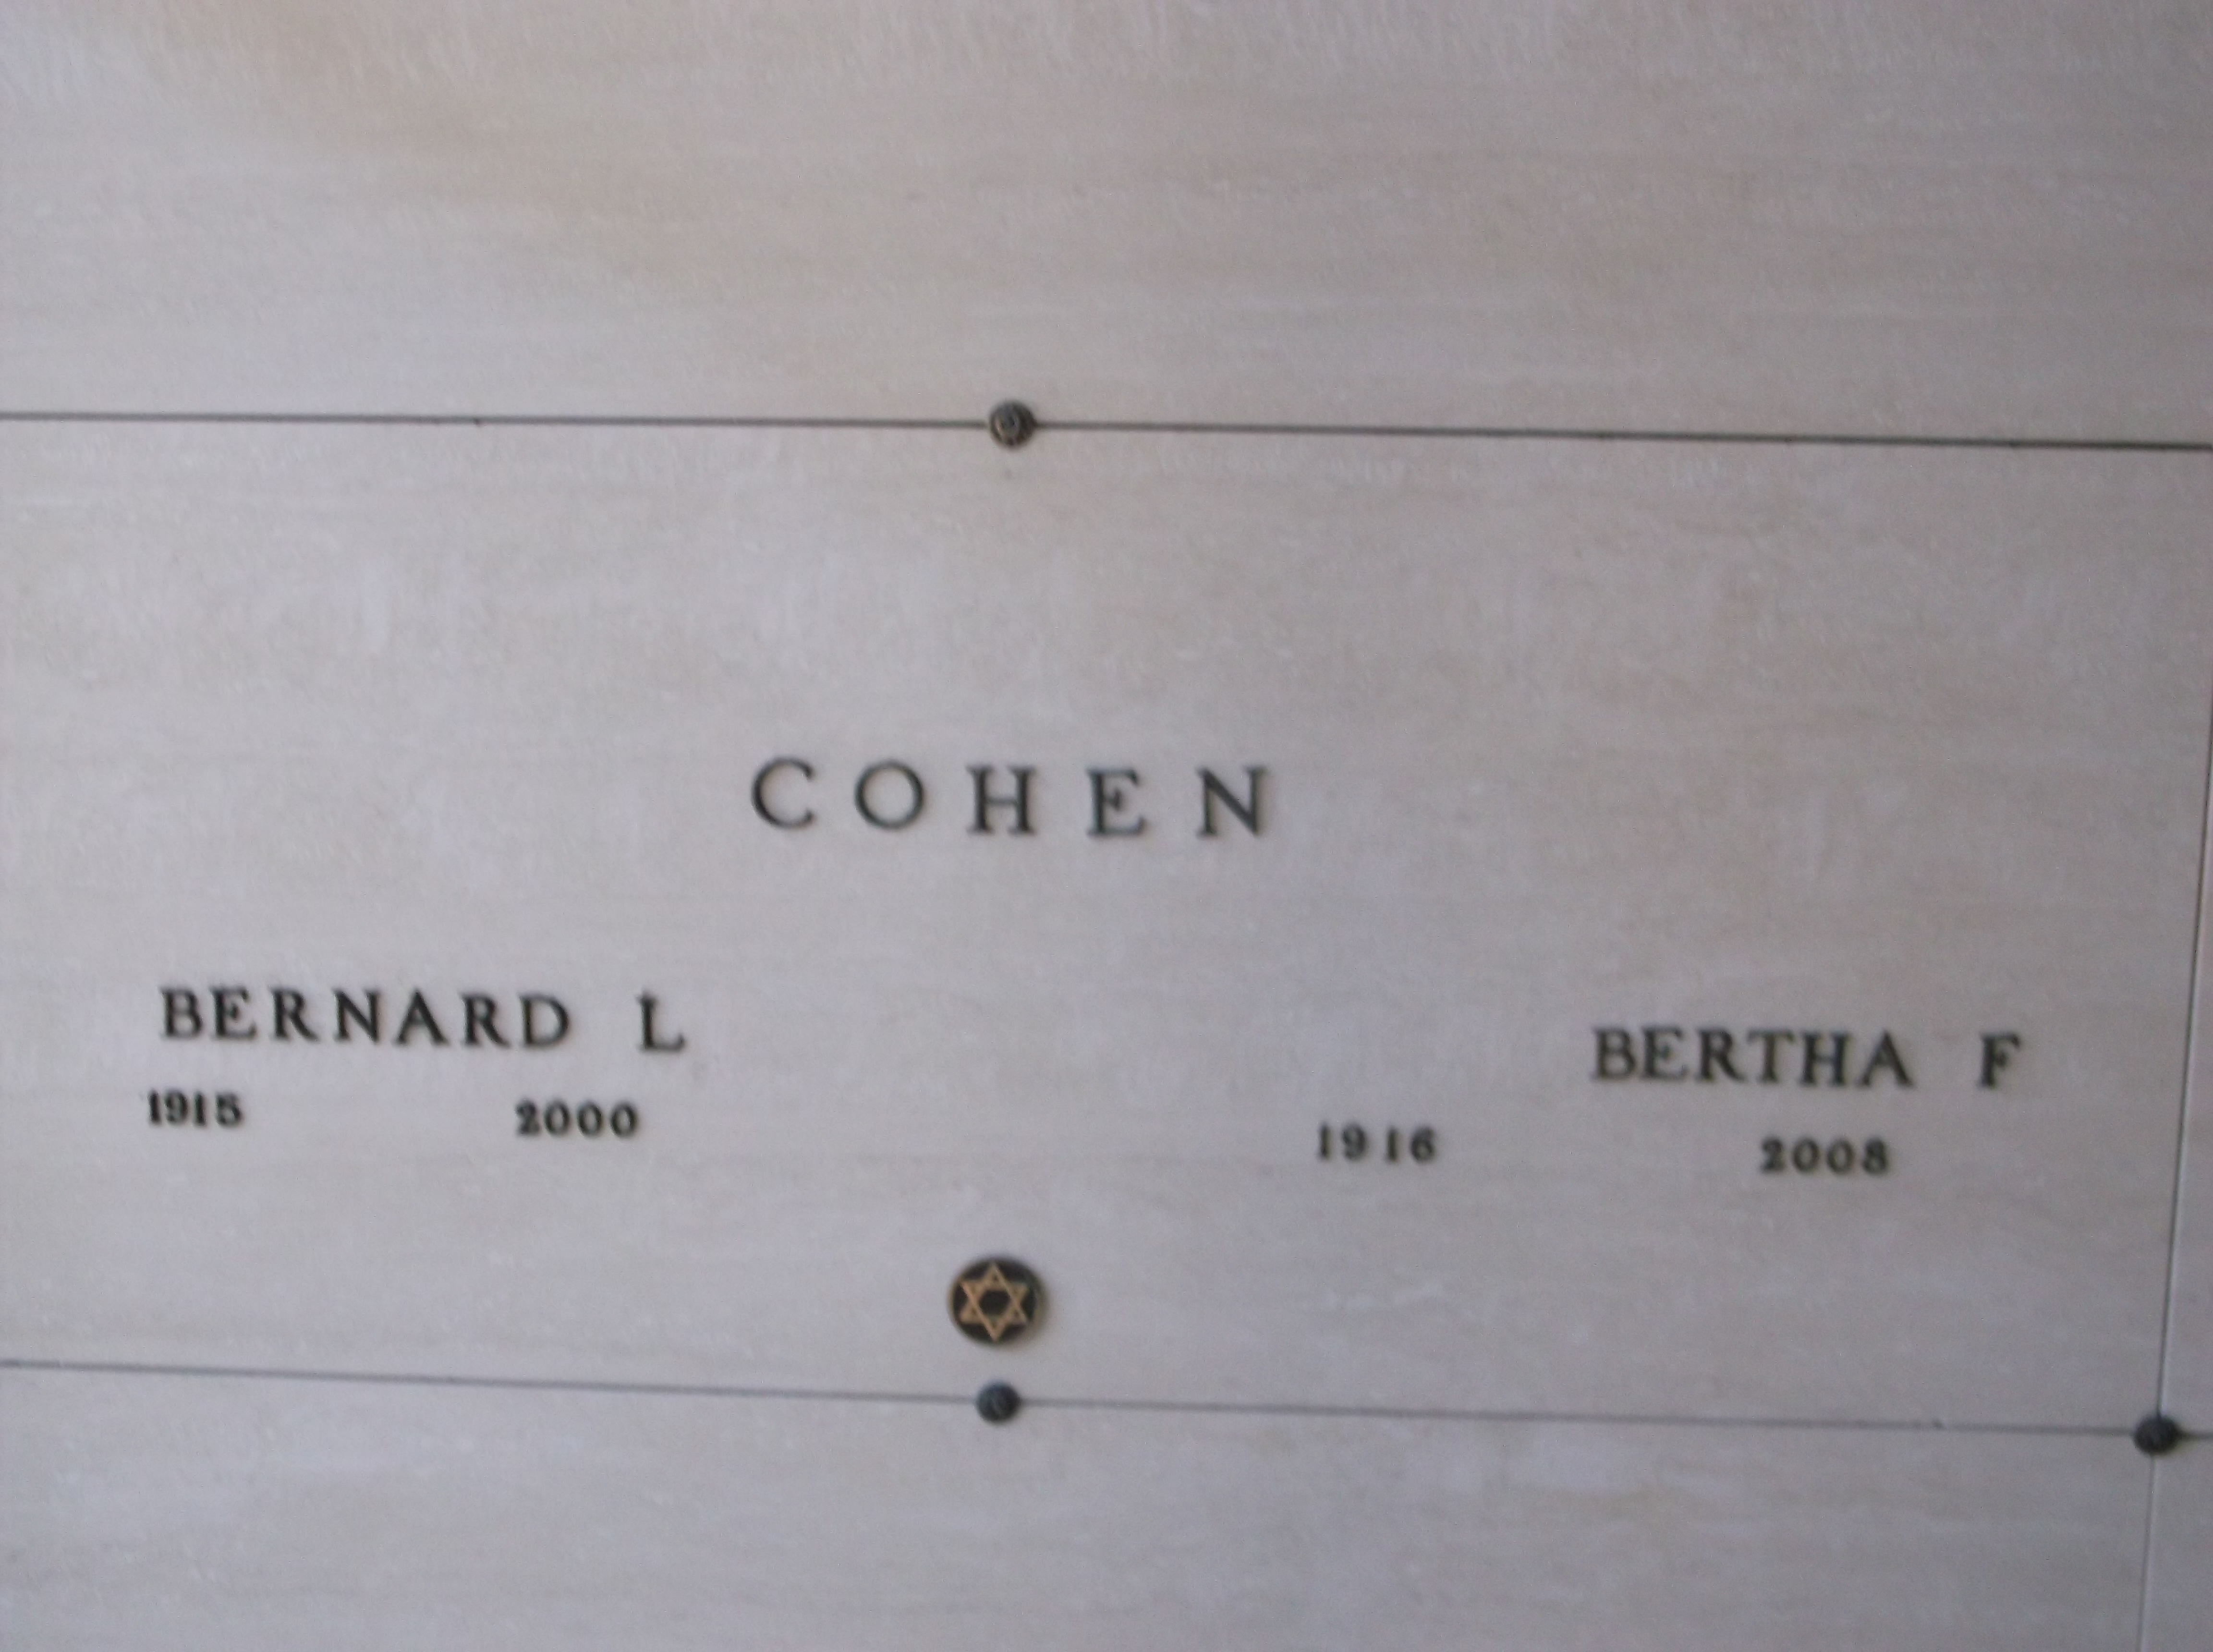 Bertha F Cohen